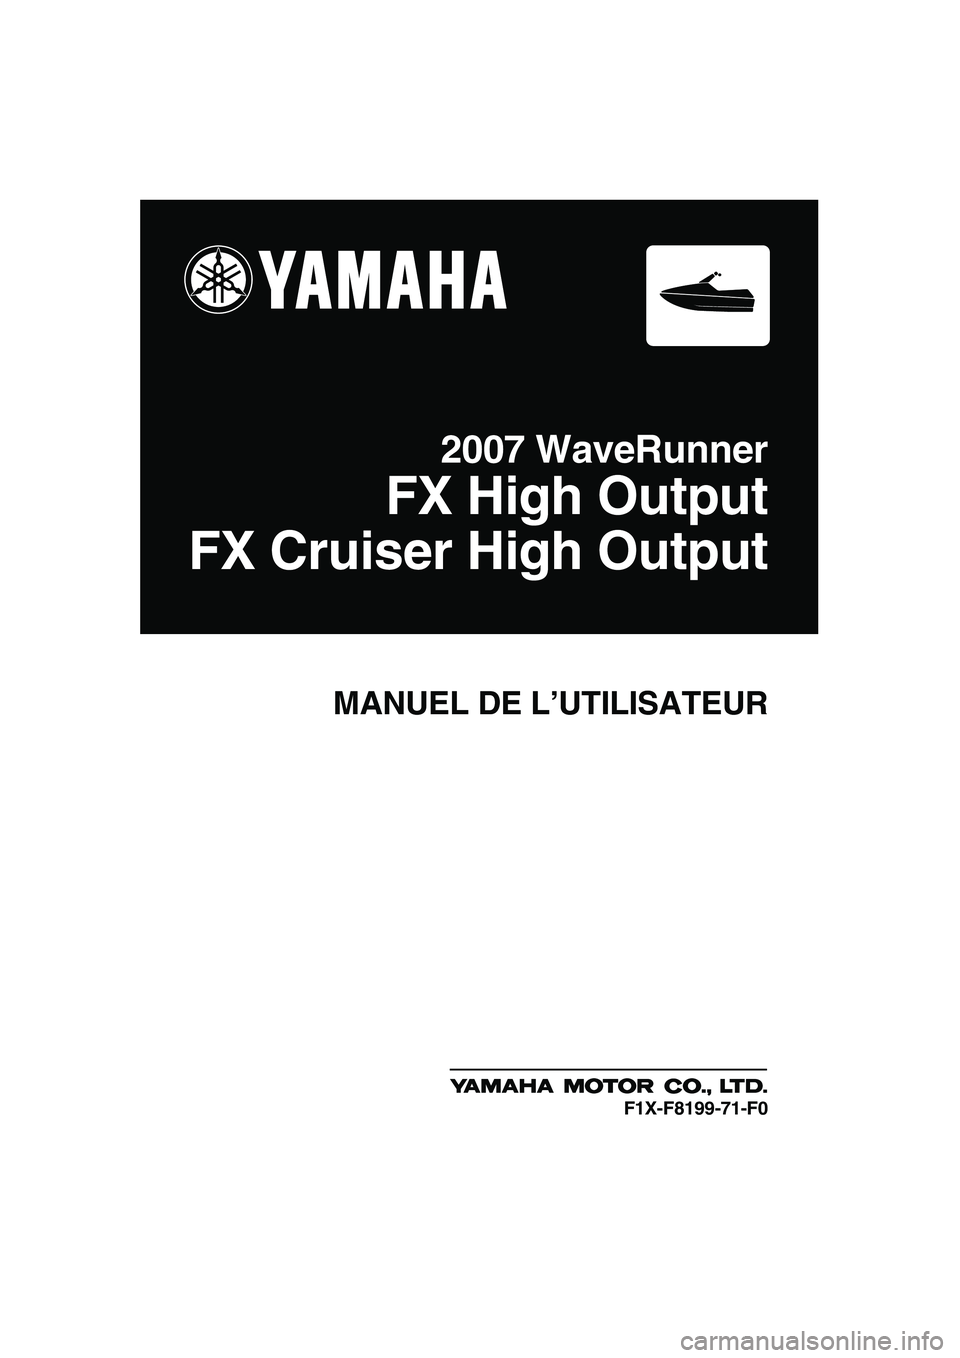 YAMAHA FX HO 2007  Notices Demploi (in French) MANUEL DE L’UTILISATEUR
2007 WaveRunner
FX High Output
FX Cruiser High Output
F1X-F8199-71-F0
UF1X71F0.book  Page 1  Wednesday, September 27, 2006  1:04 PM 